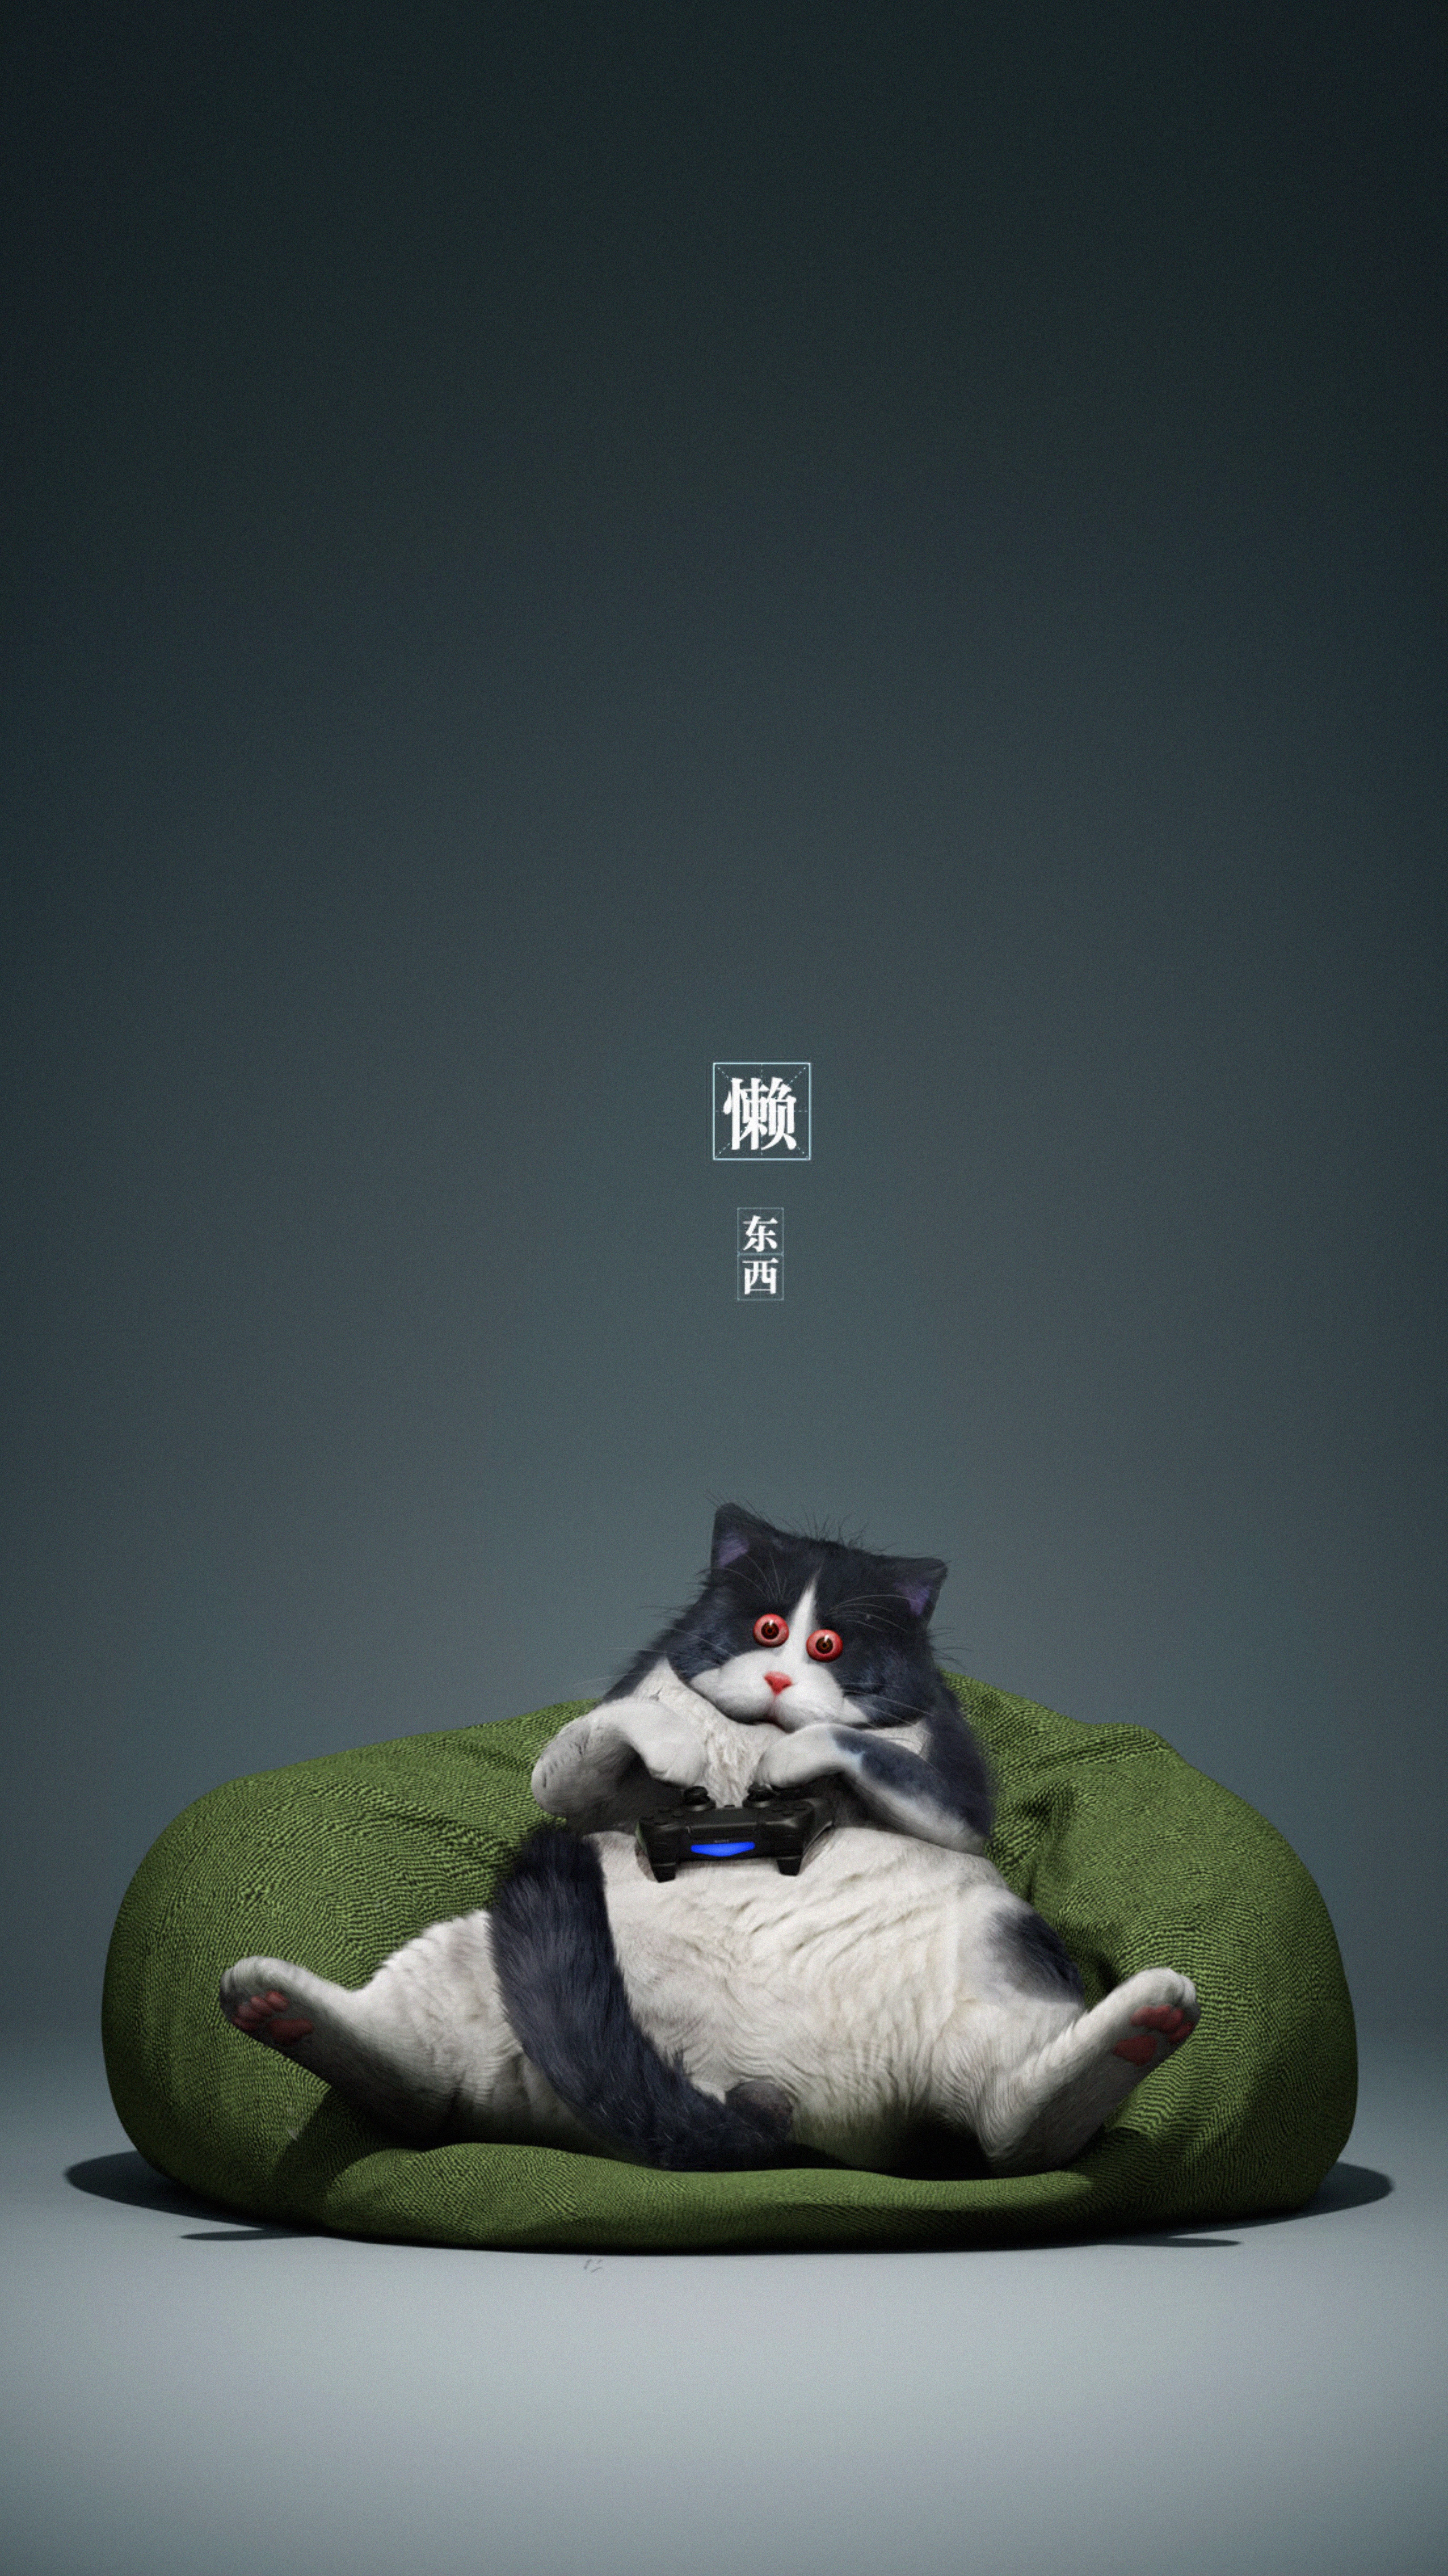 Gamer miscellanea, cool, cat, gamepad 8k Backgrounds